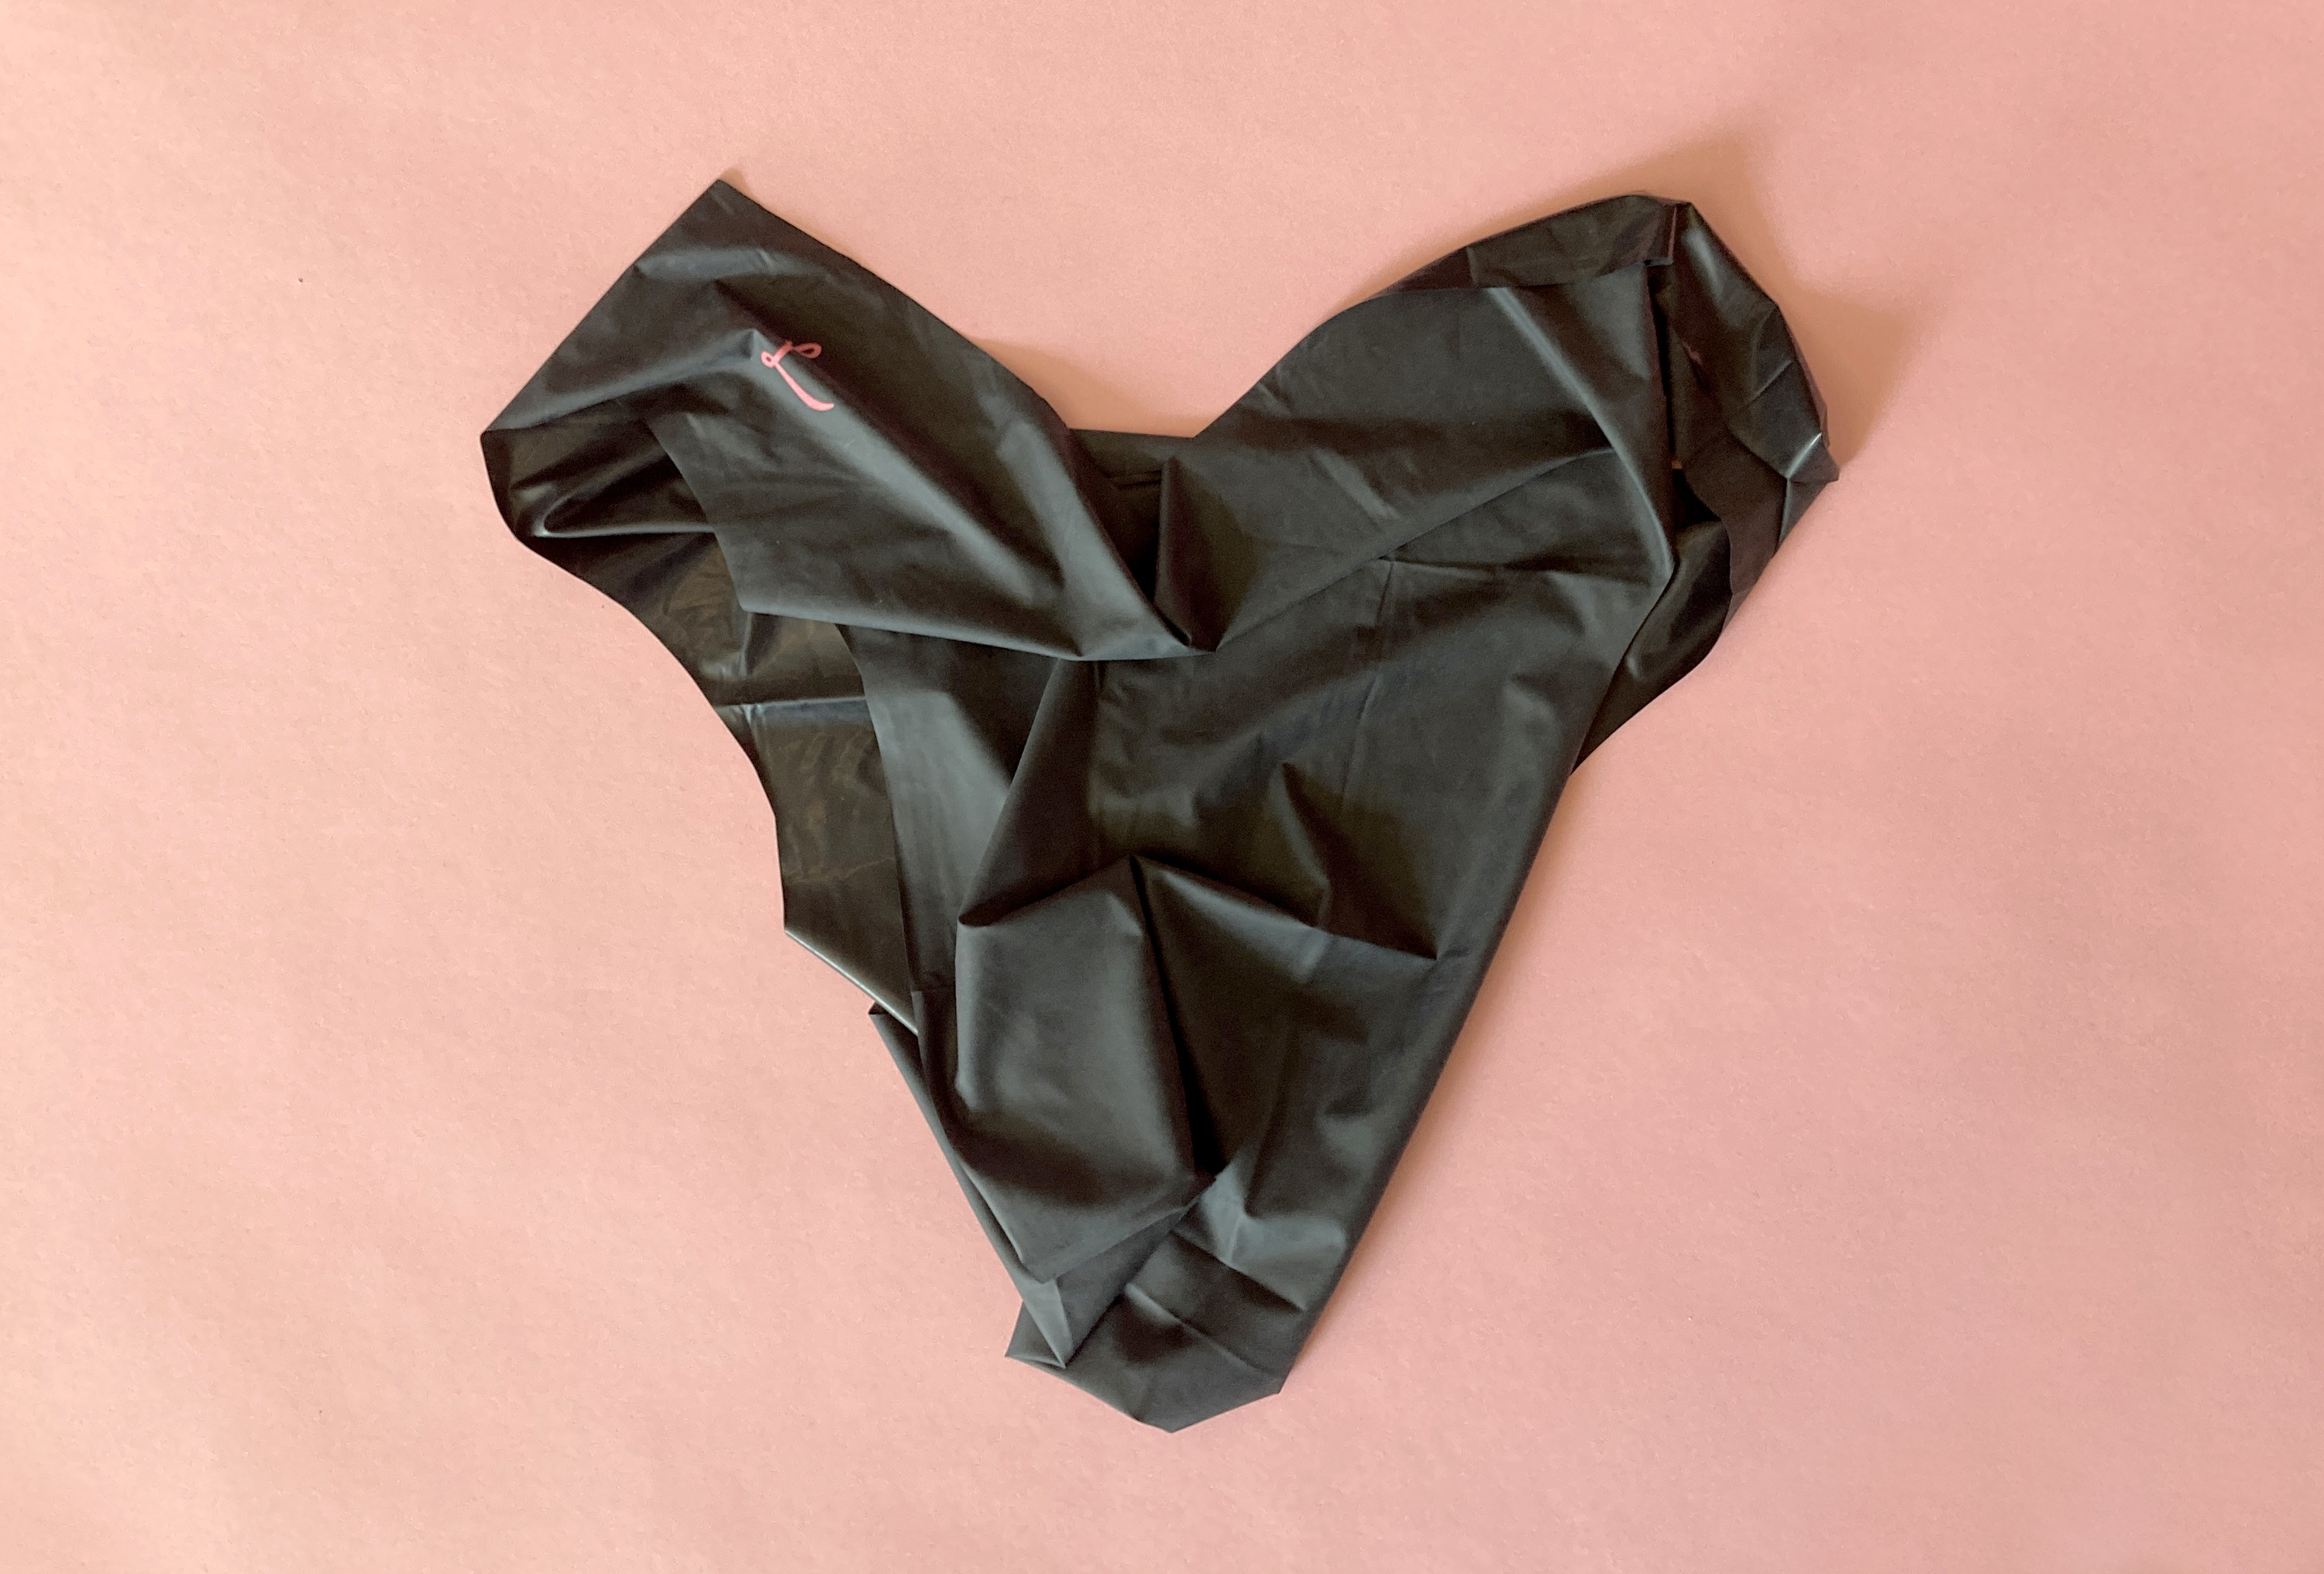 FDA OKs Underwear For STI Protection During Oral Sex